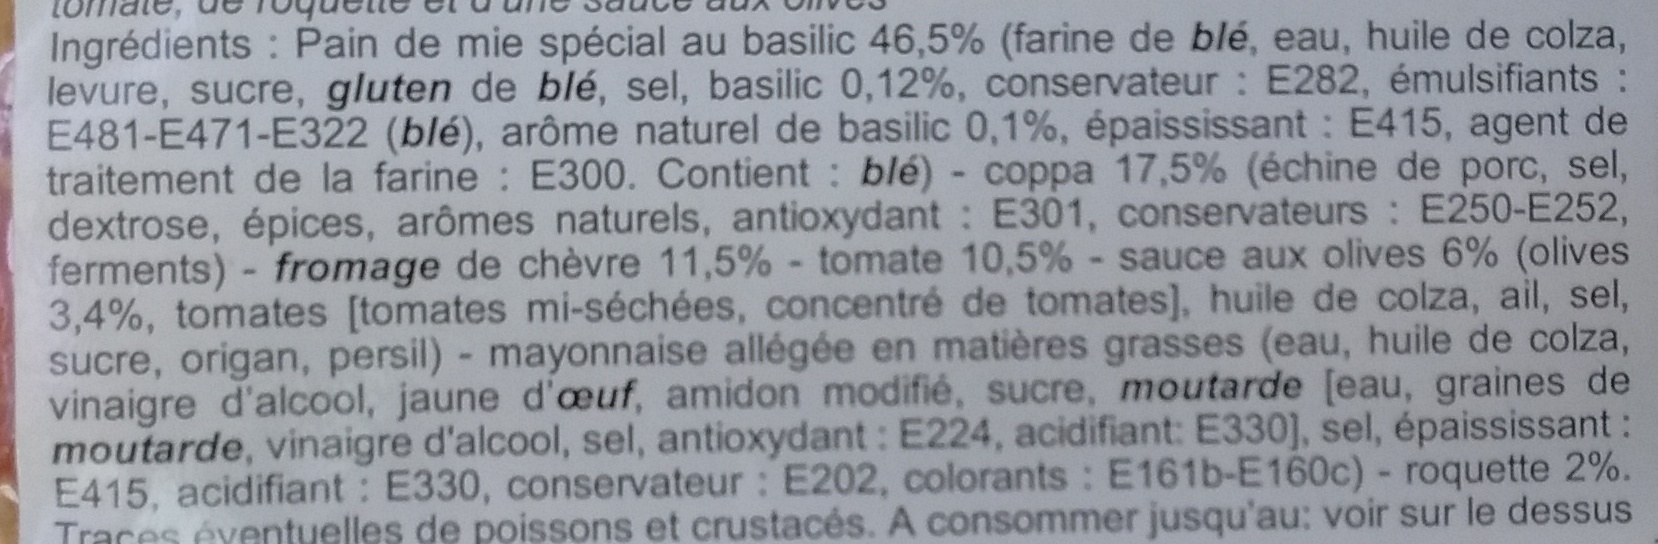 L'Authentique Coppa Tomate Chèvre Roquette Sauce olives - Ingredients - fr